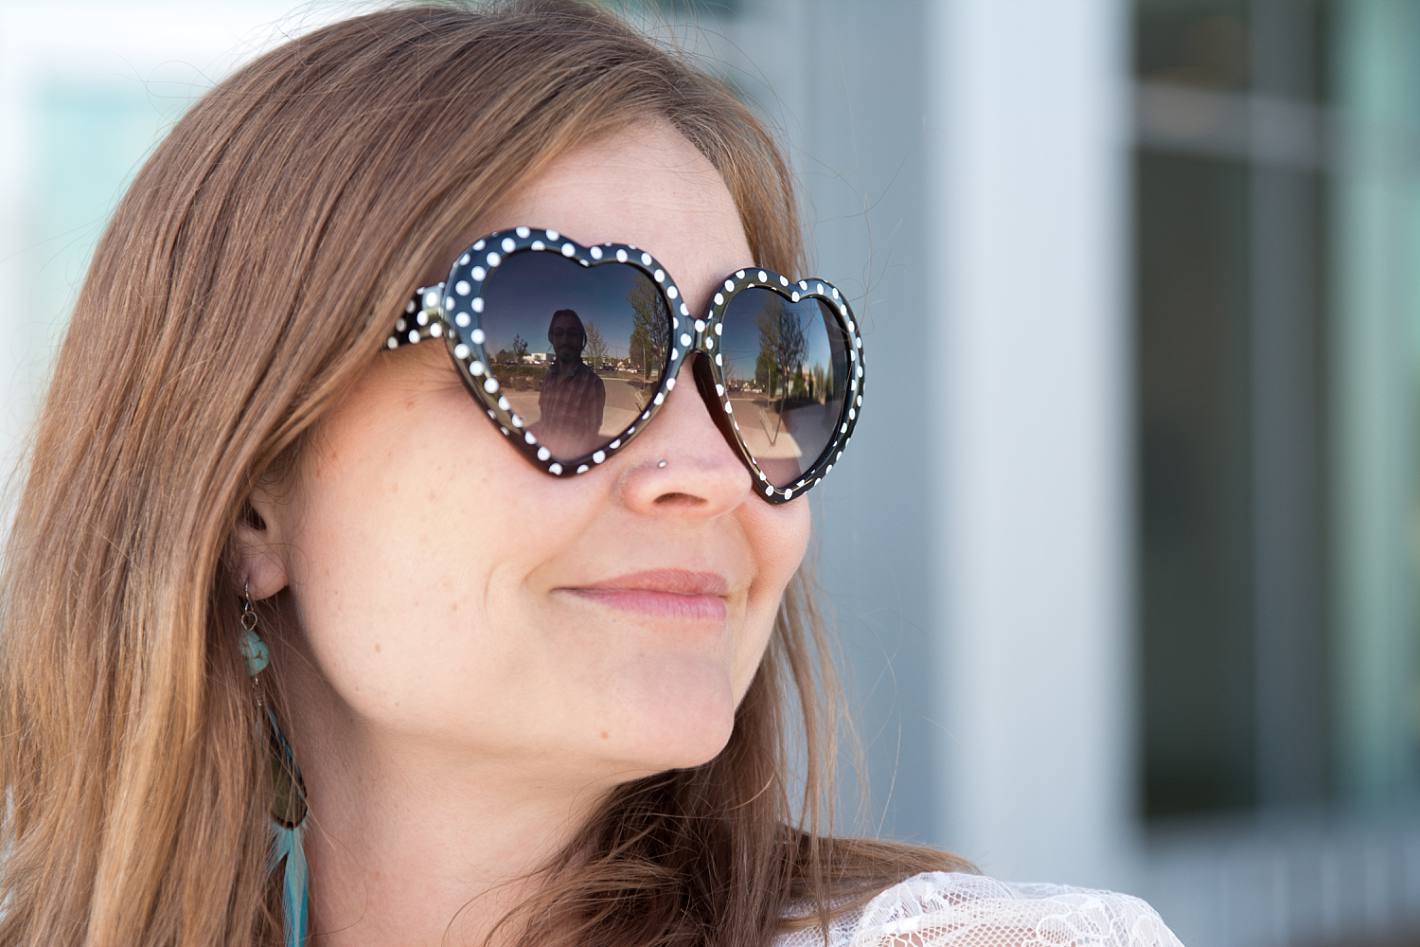 Polka dot heart shaped sunglasses, reflection of husband